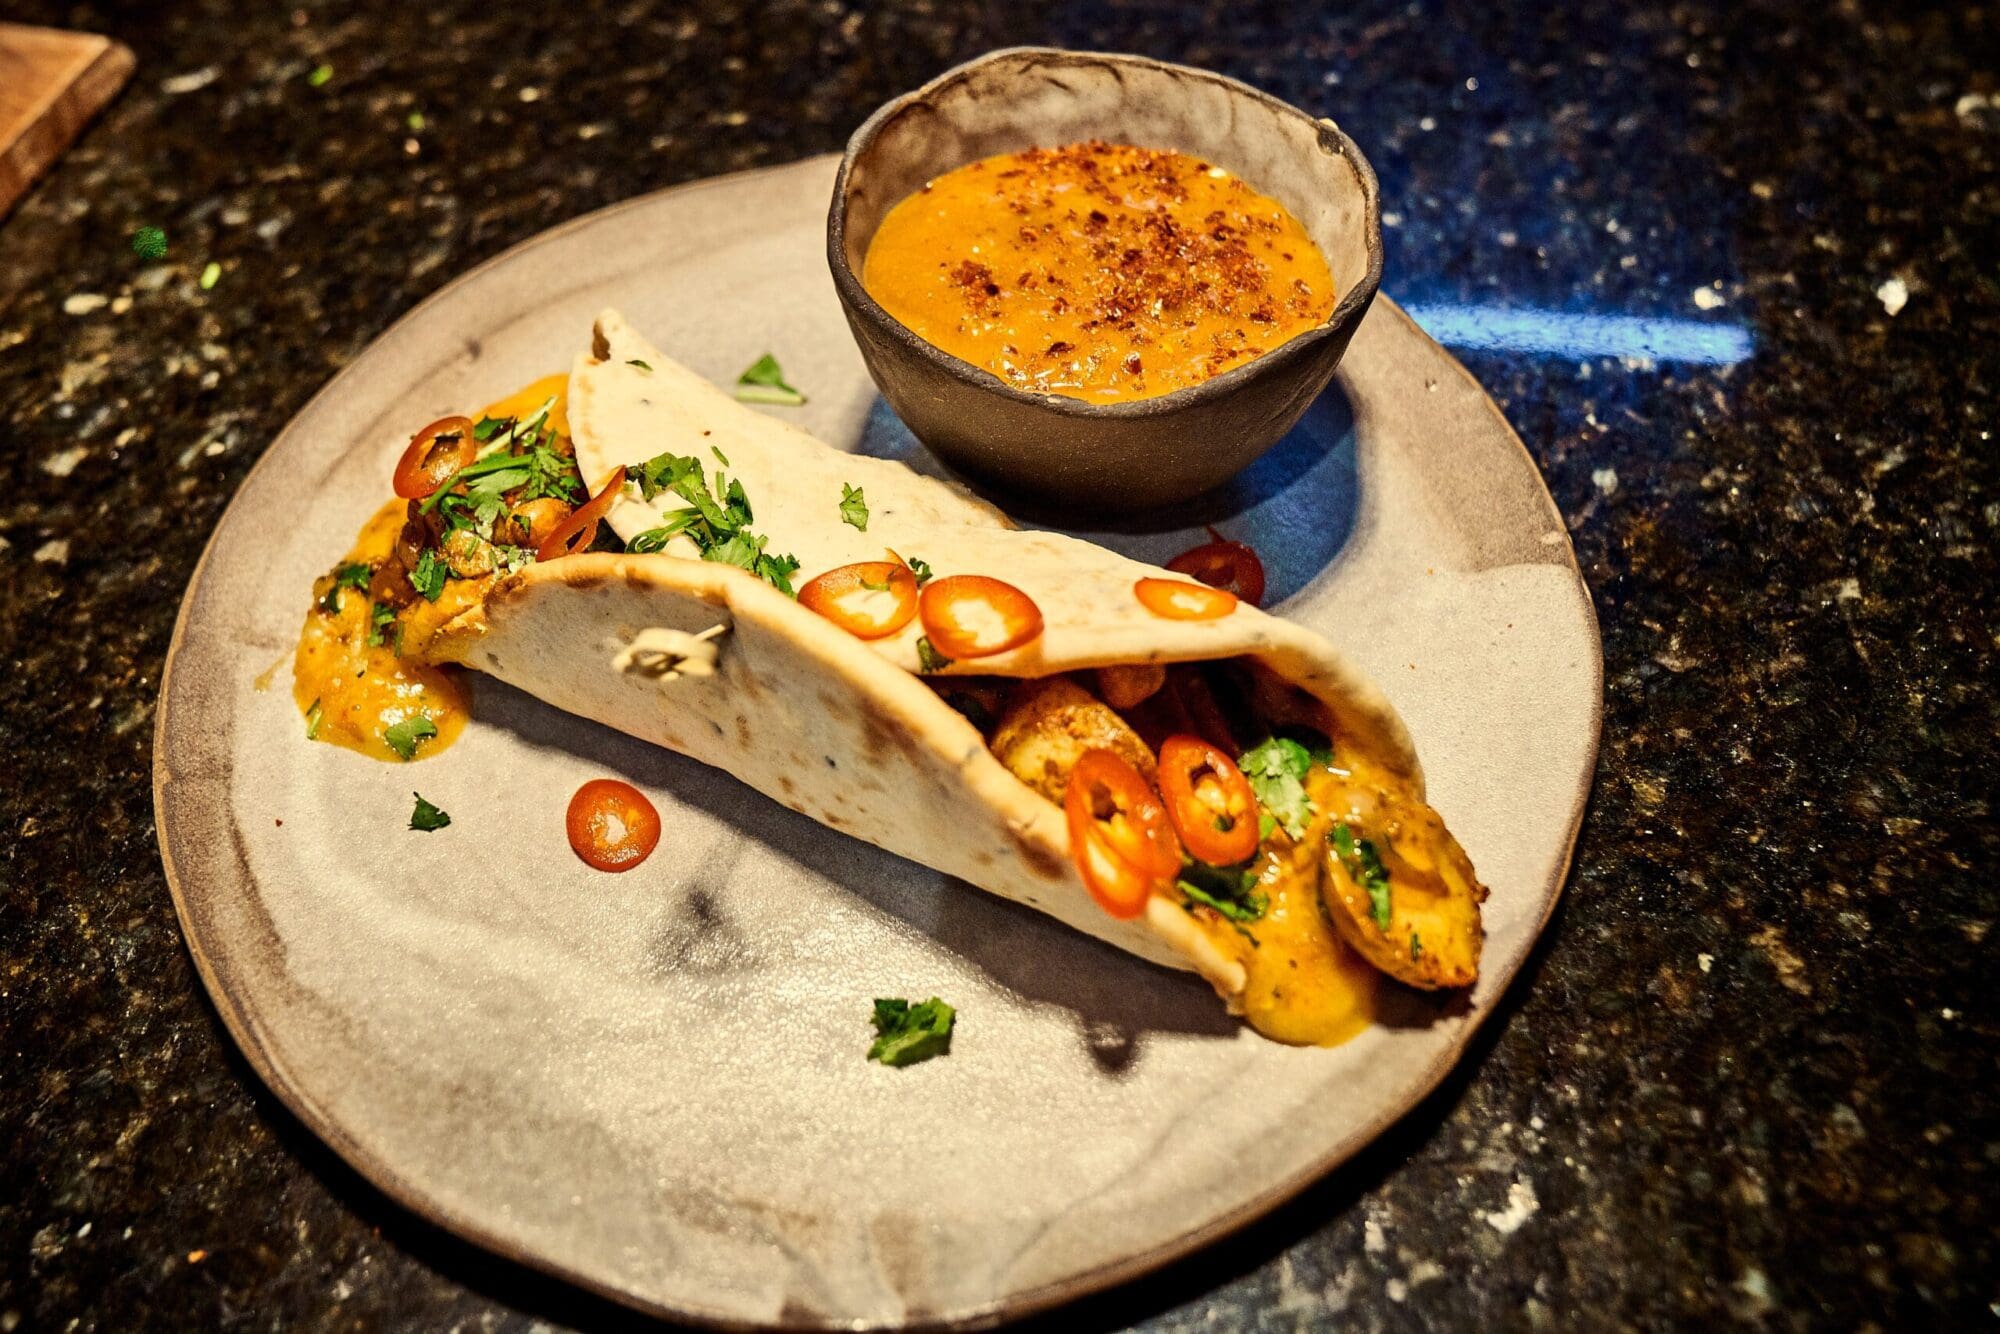 Naantastic’ Rarebit with Bombay Taters & Curry Sauce